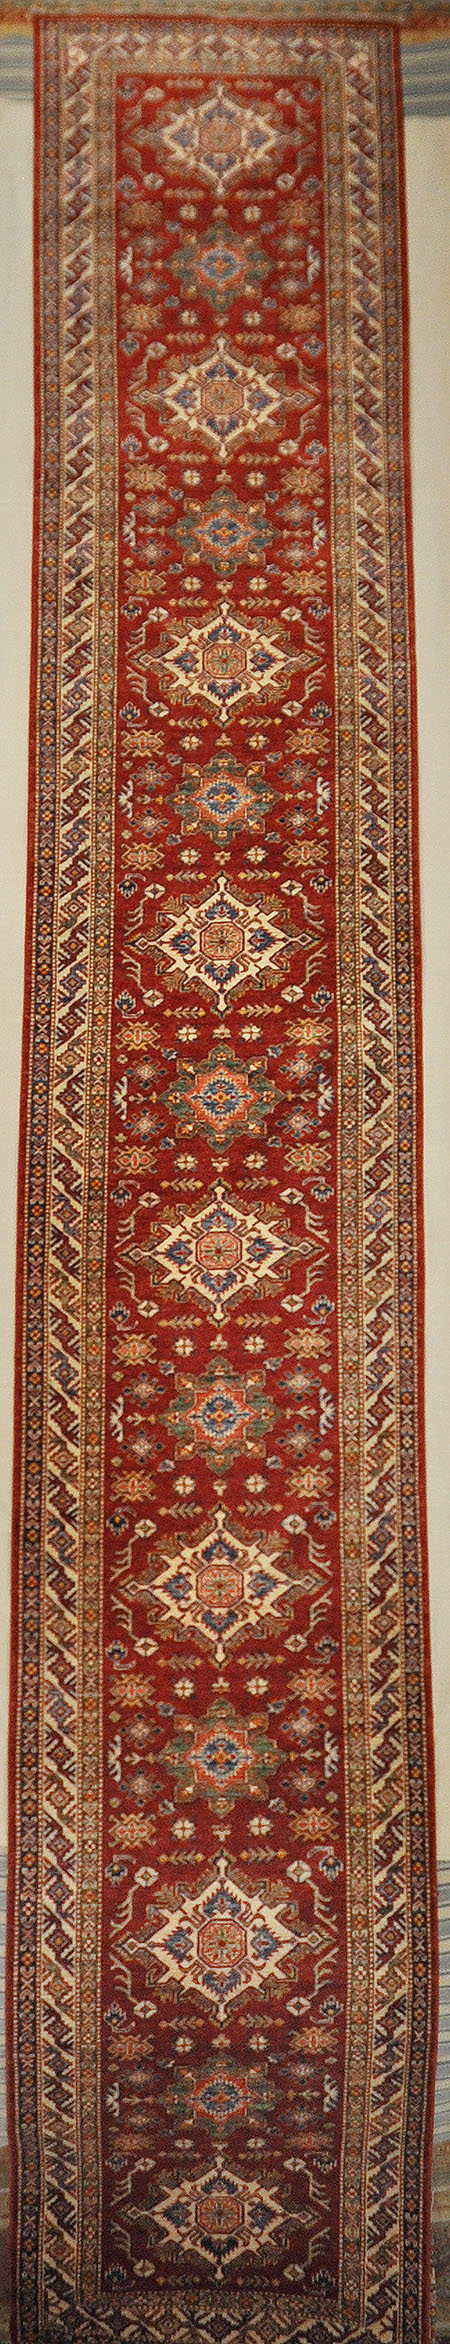 Turkoman Caucasian Rug santa barbara desing center rugs and more oriental carpet 31001-